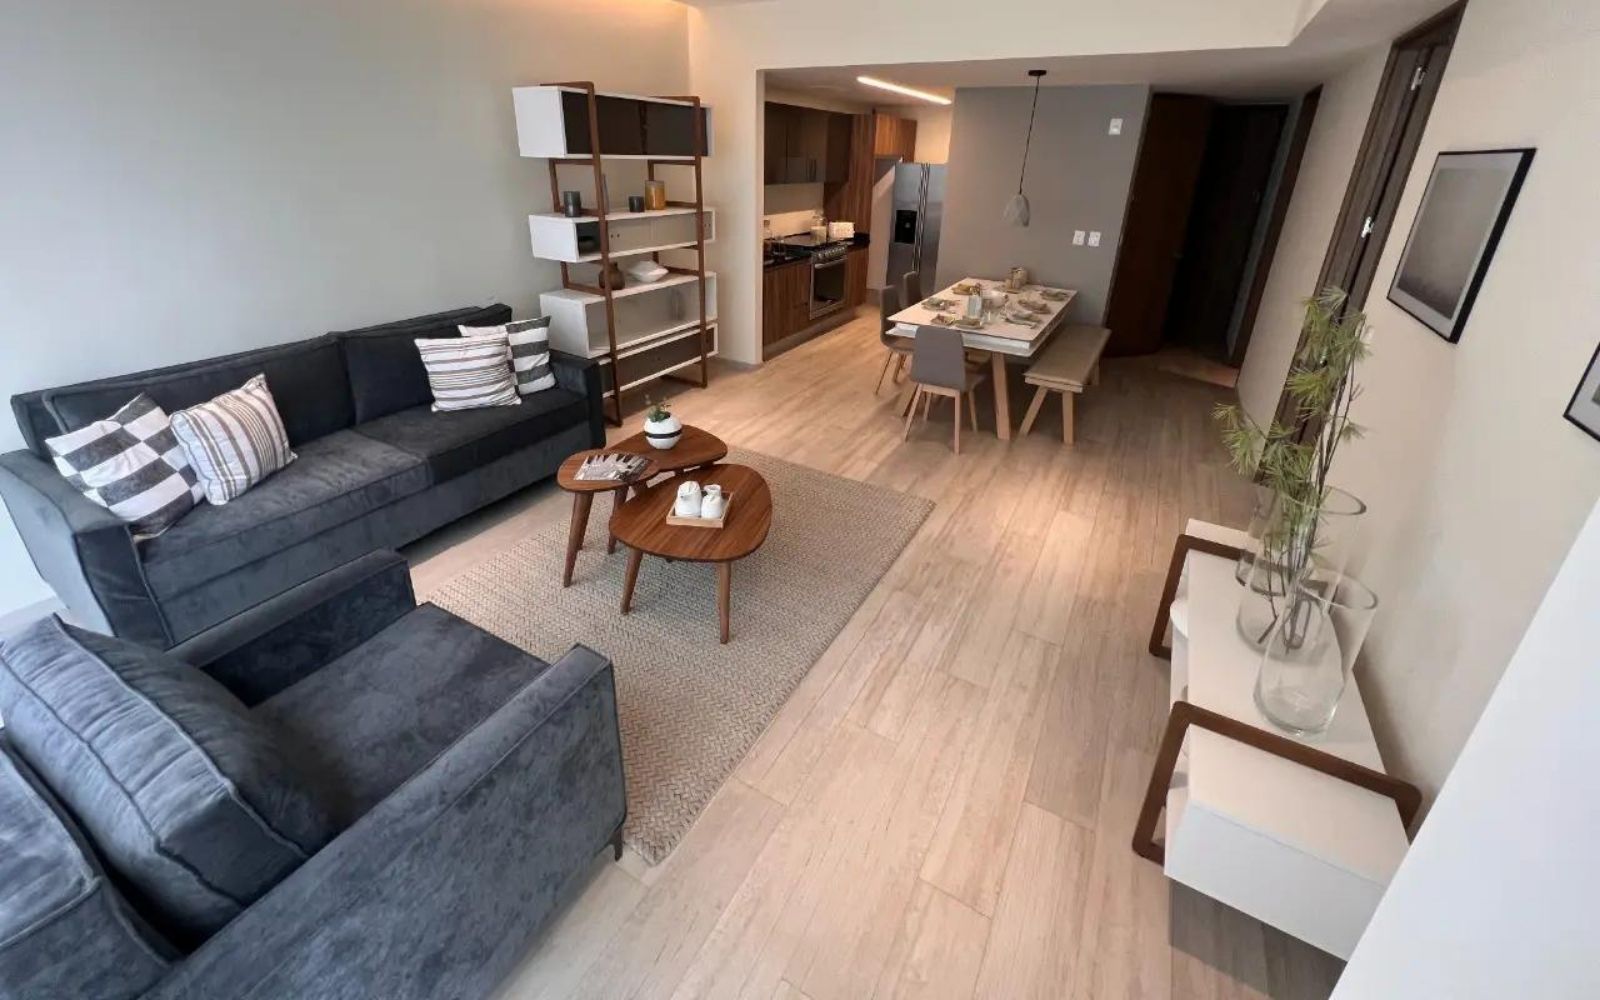 Condominio con alberca, terraza, Sky lounge, en venta Roma Norte CDMX.